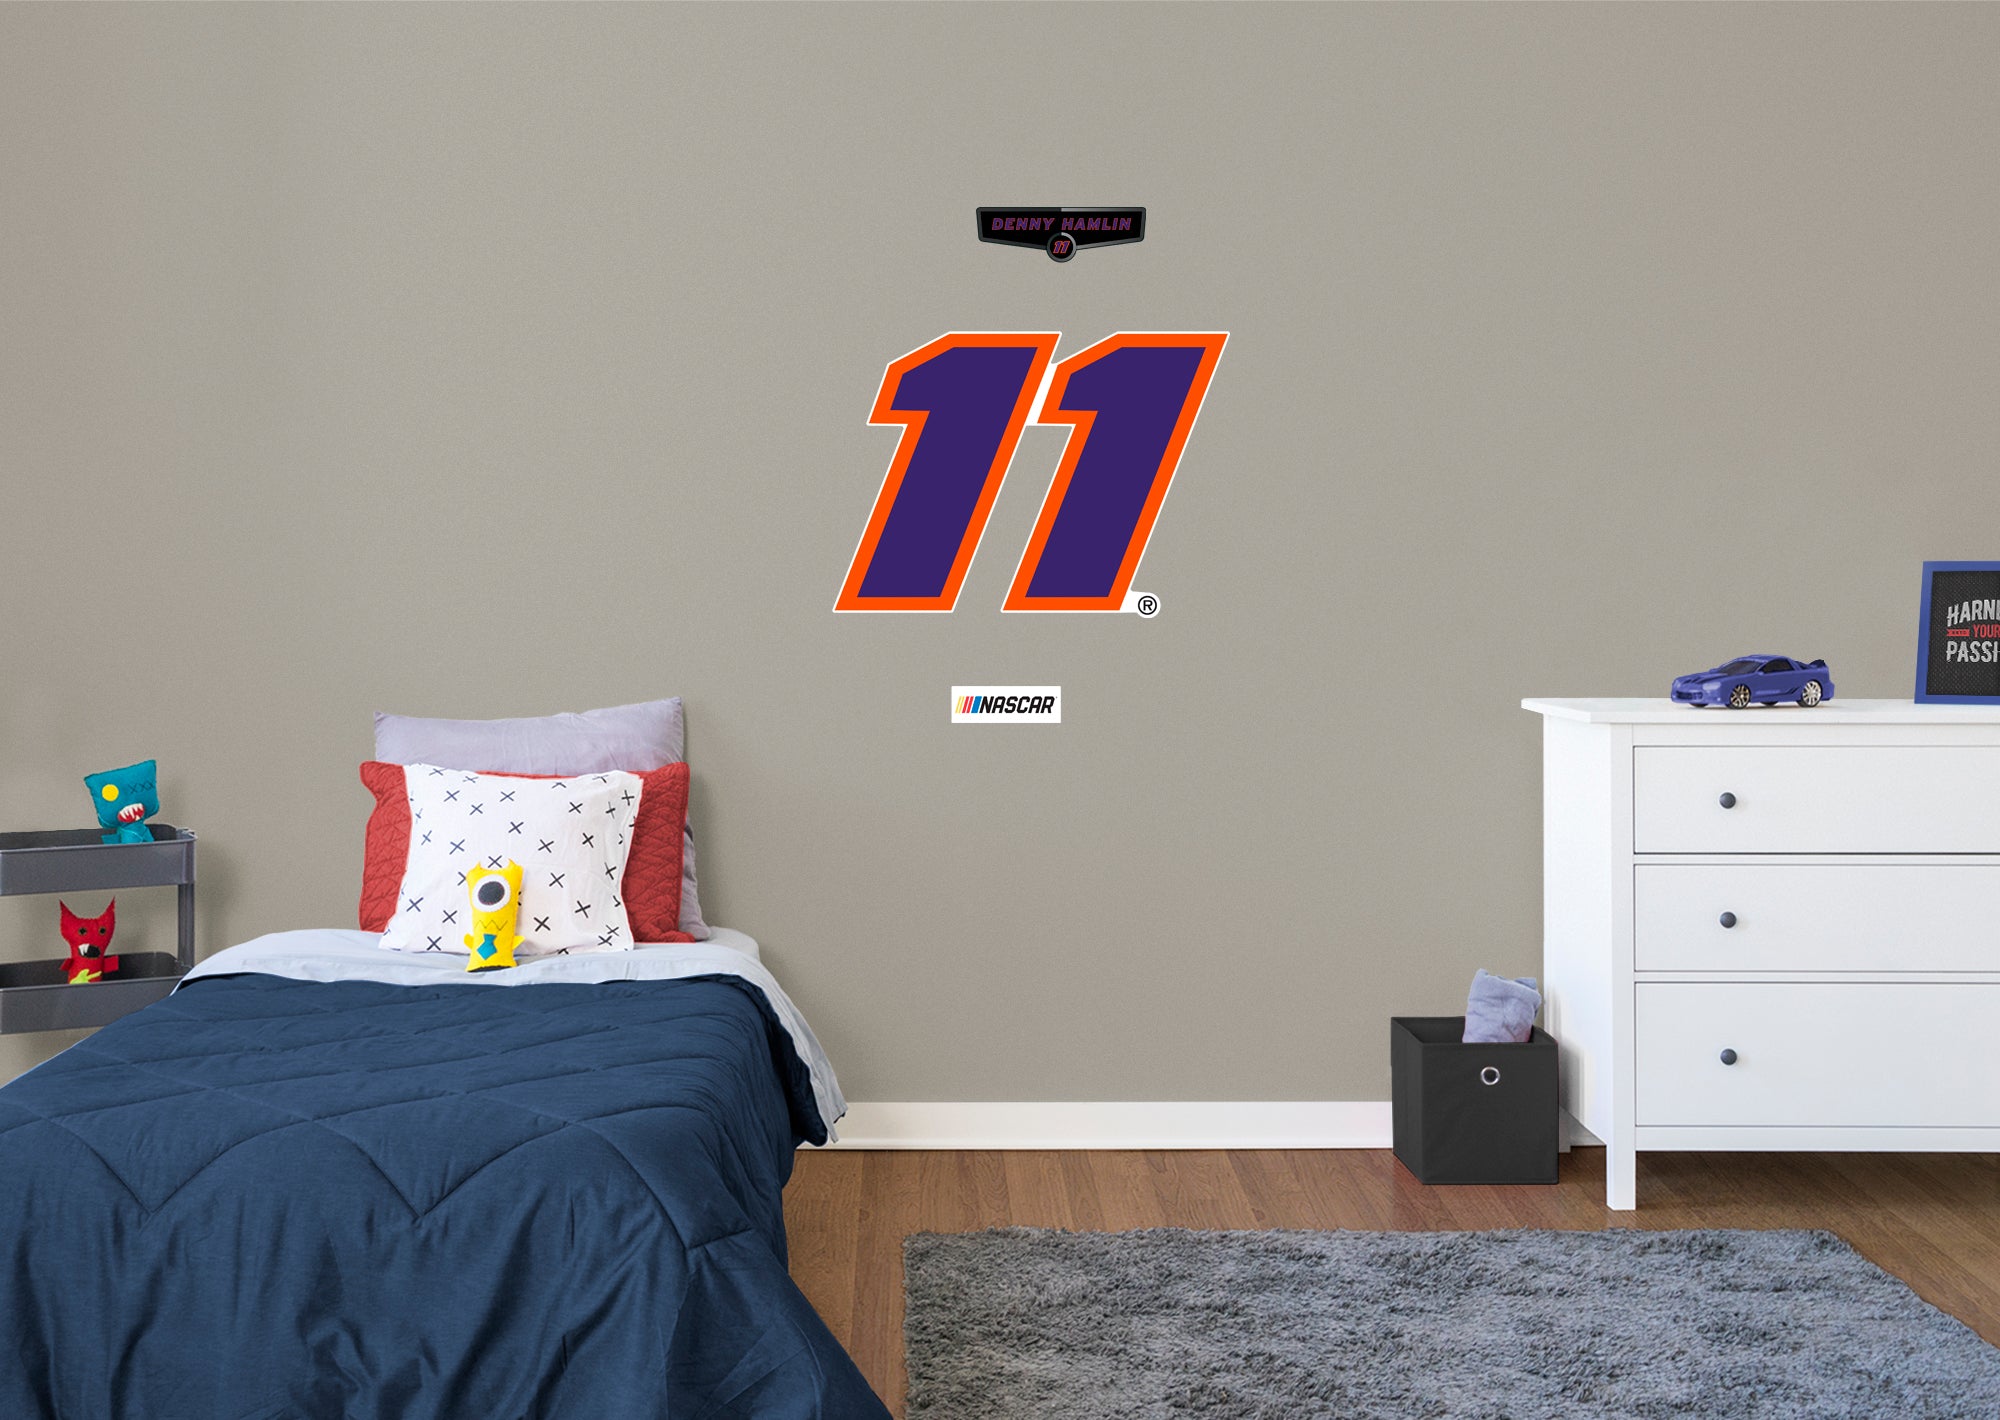 Denny Hamlin 2021 #11 Logo - Officially Licensed NASCAR Removable Wall Decal XL by Fathead | Vinyl